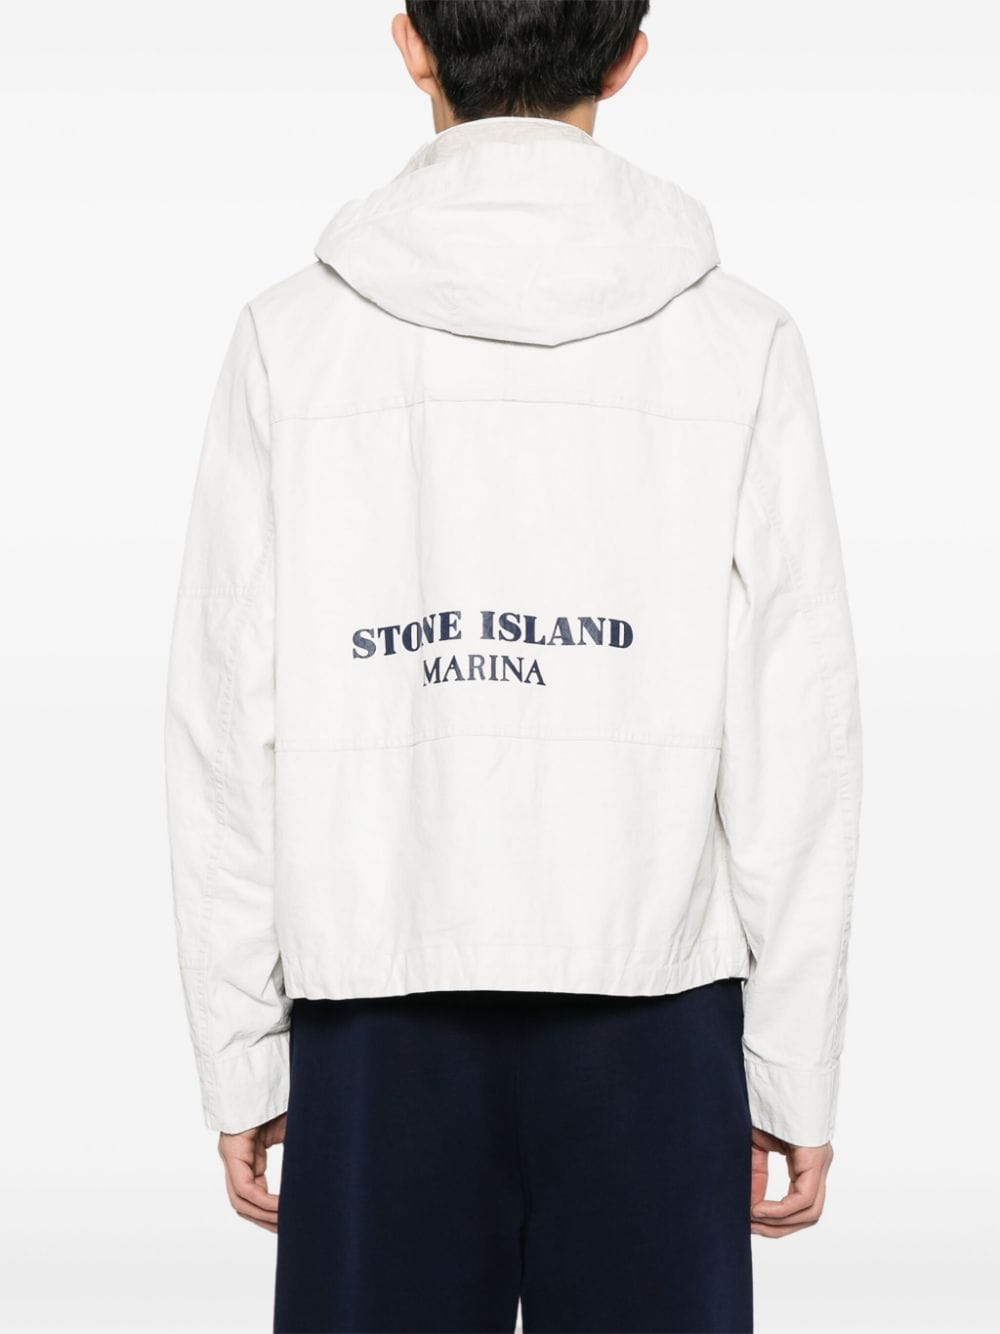 Stone Island STONE ISLAND- Marina Linen Blouson Jacket